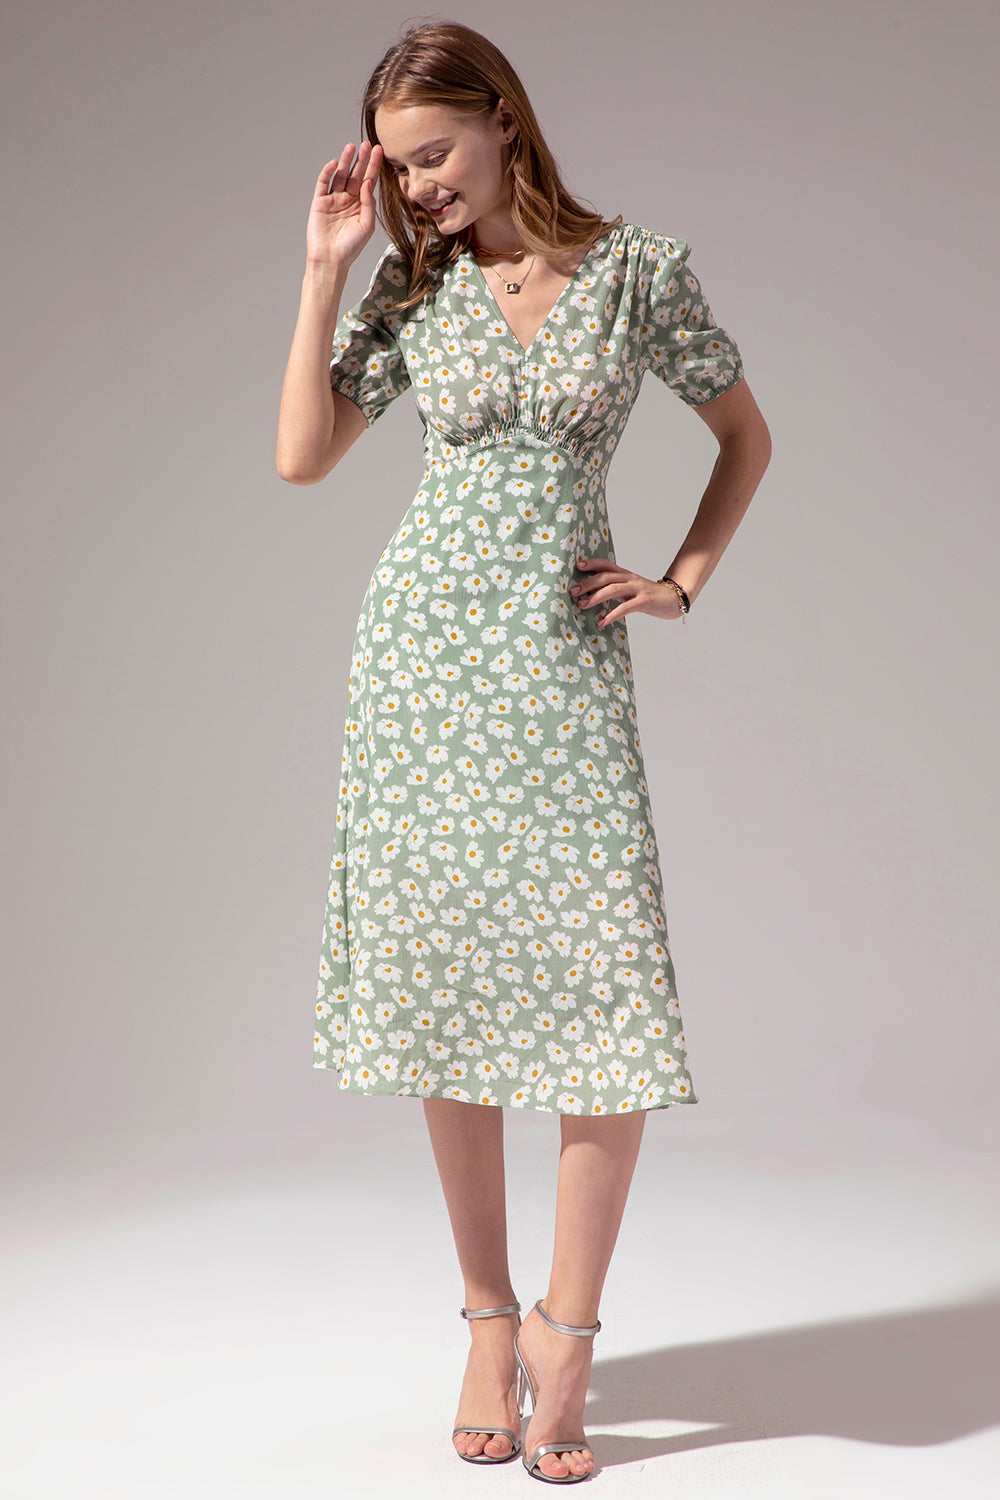 Zapaka Women Retro Style 1950s Polka Dots Ivory Midi Swing Dress – ZAPAKA